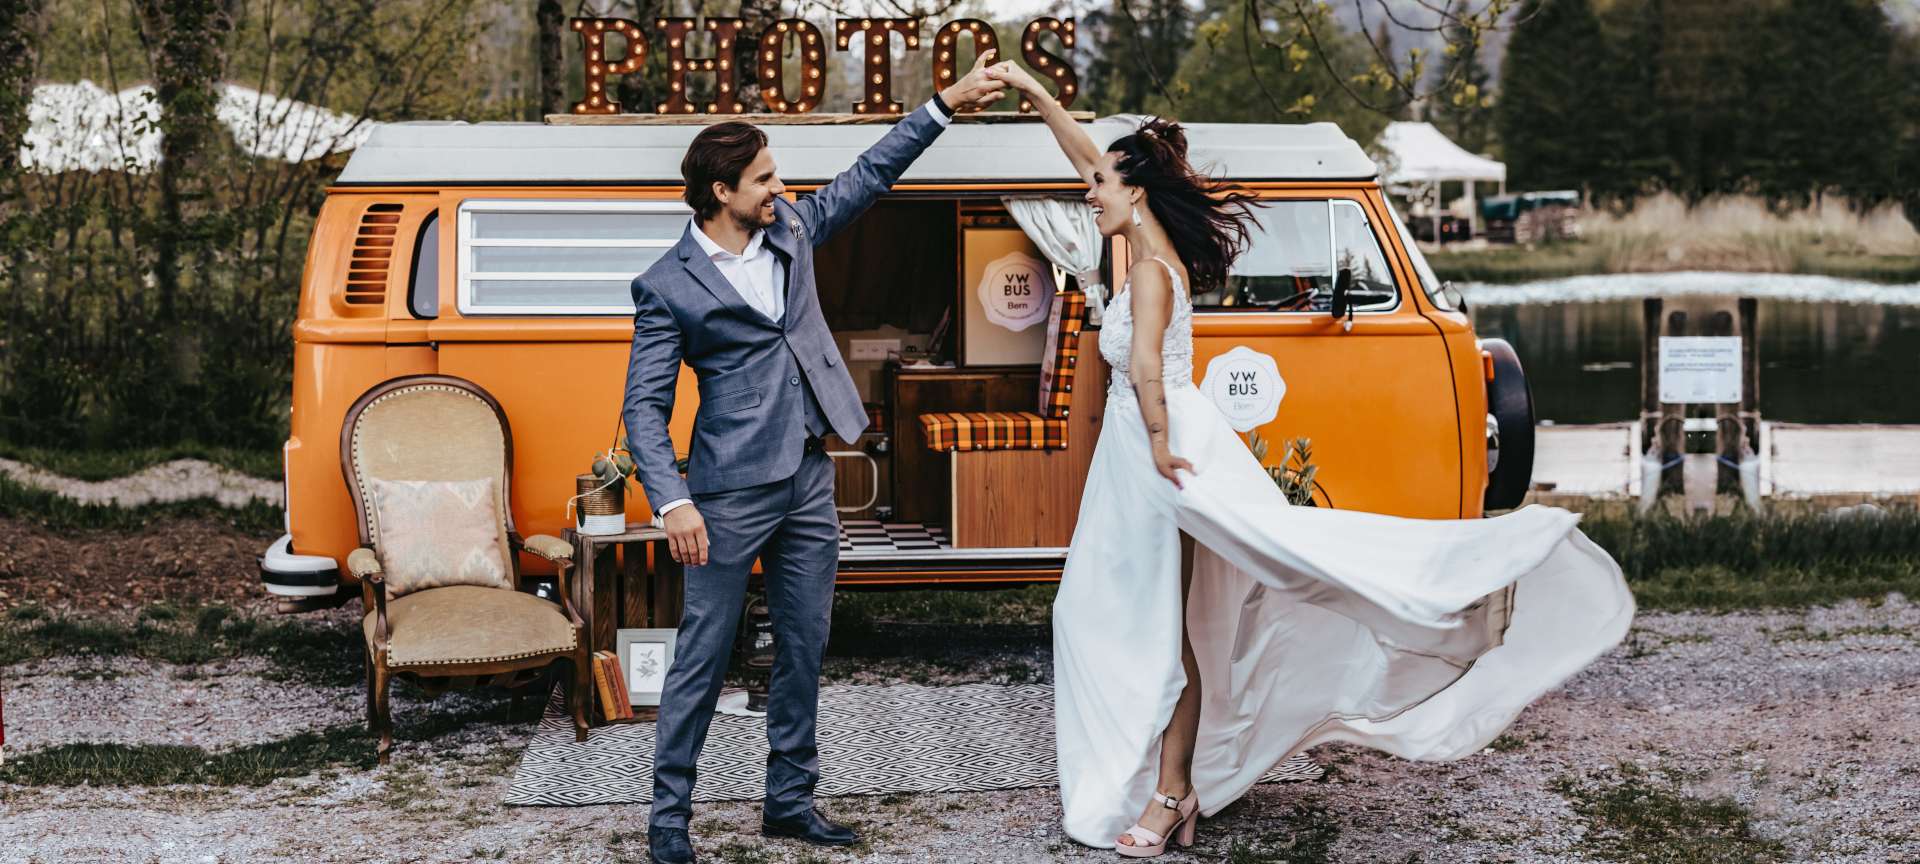 Heisses Paar tanzt vor Oldtimer-VW-Photobus